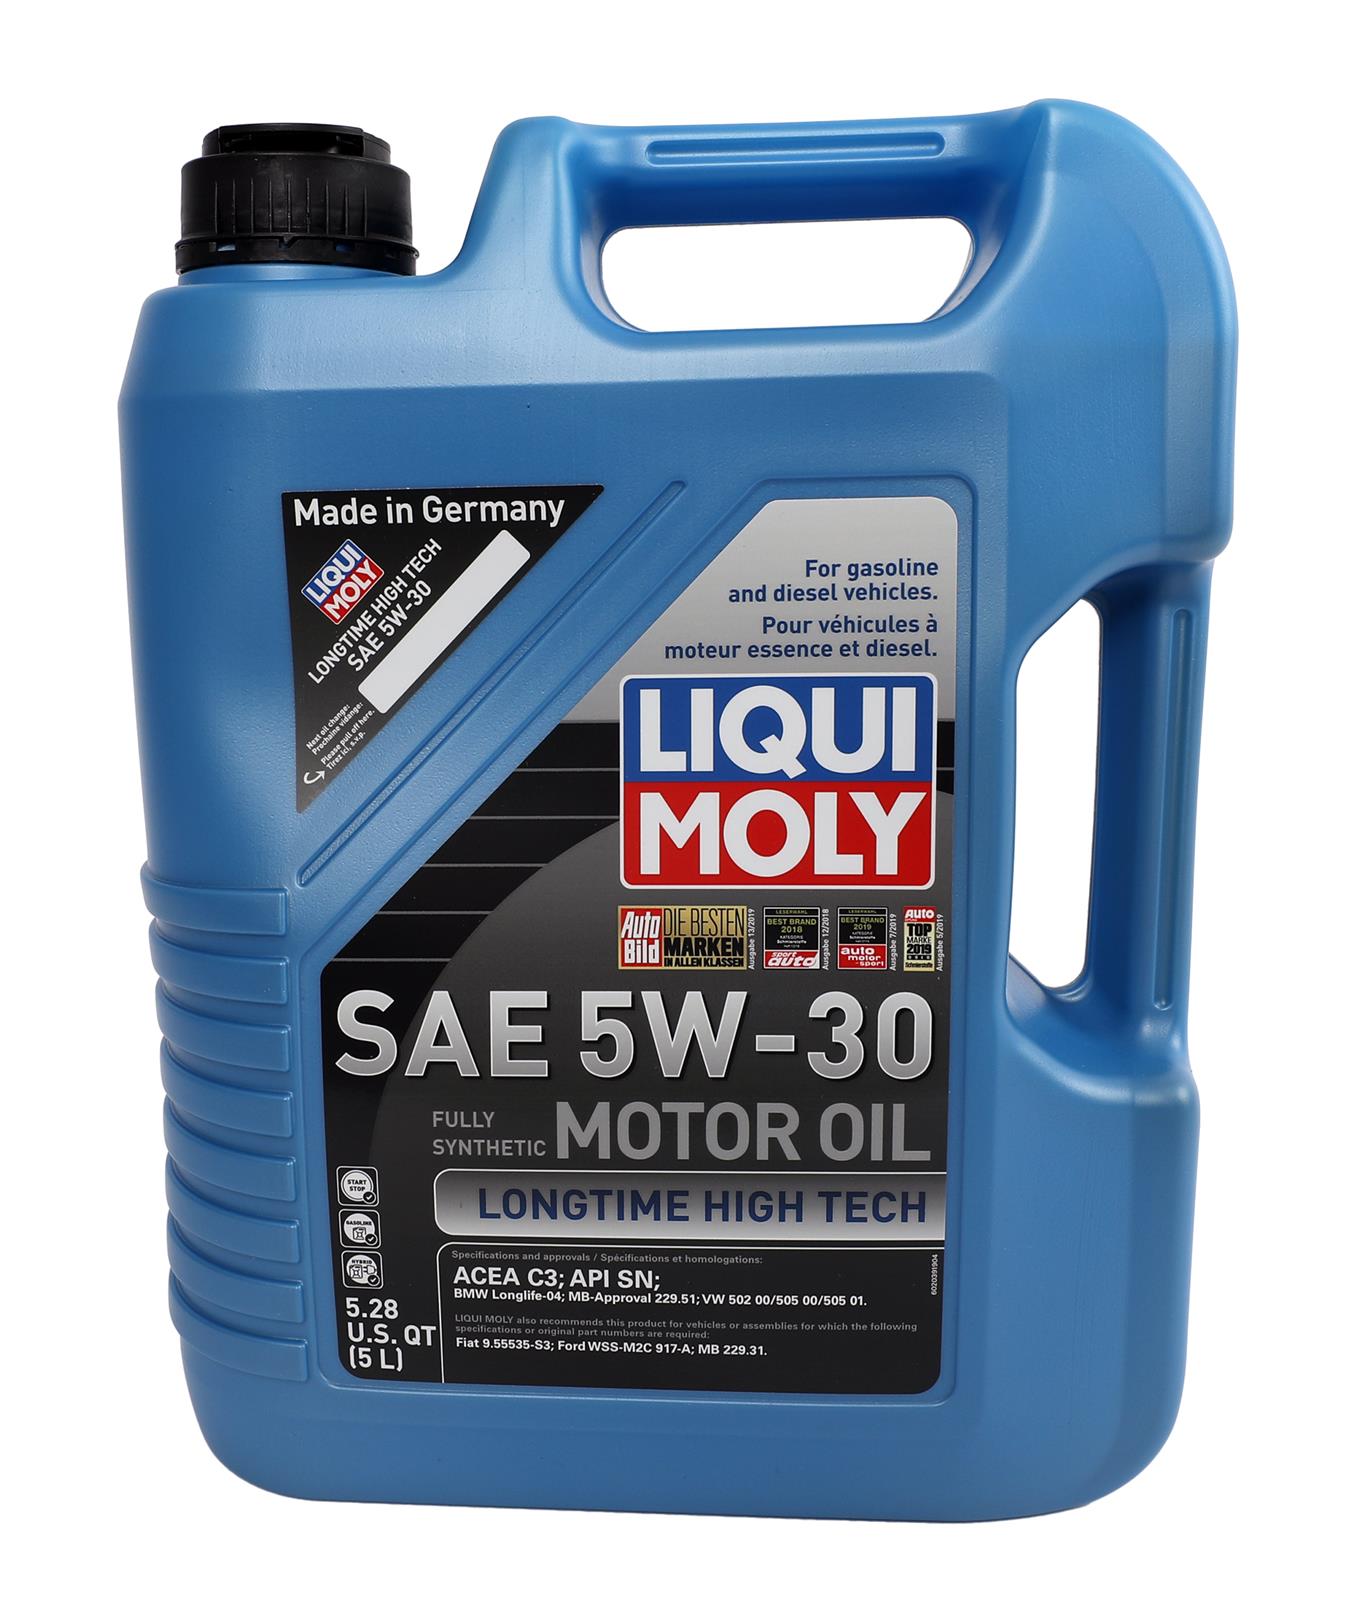 Liqui-Moly - 2039 - Longtime High Tech Engine Oil (5w-30) - 5 Liter